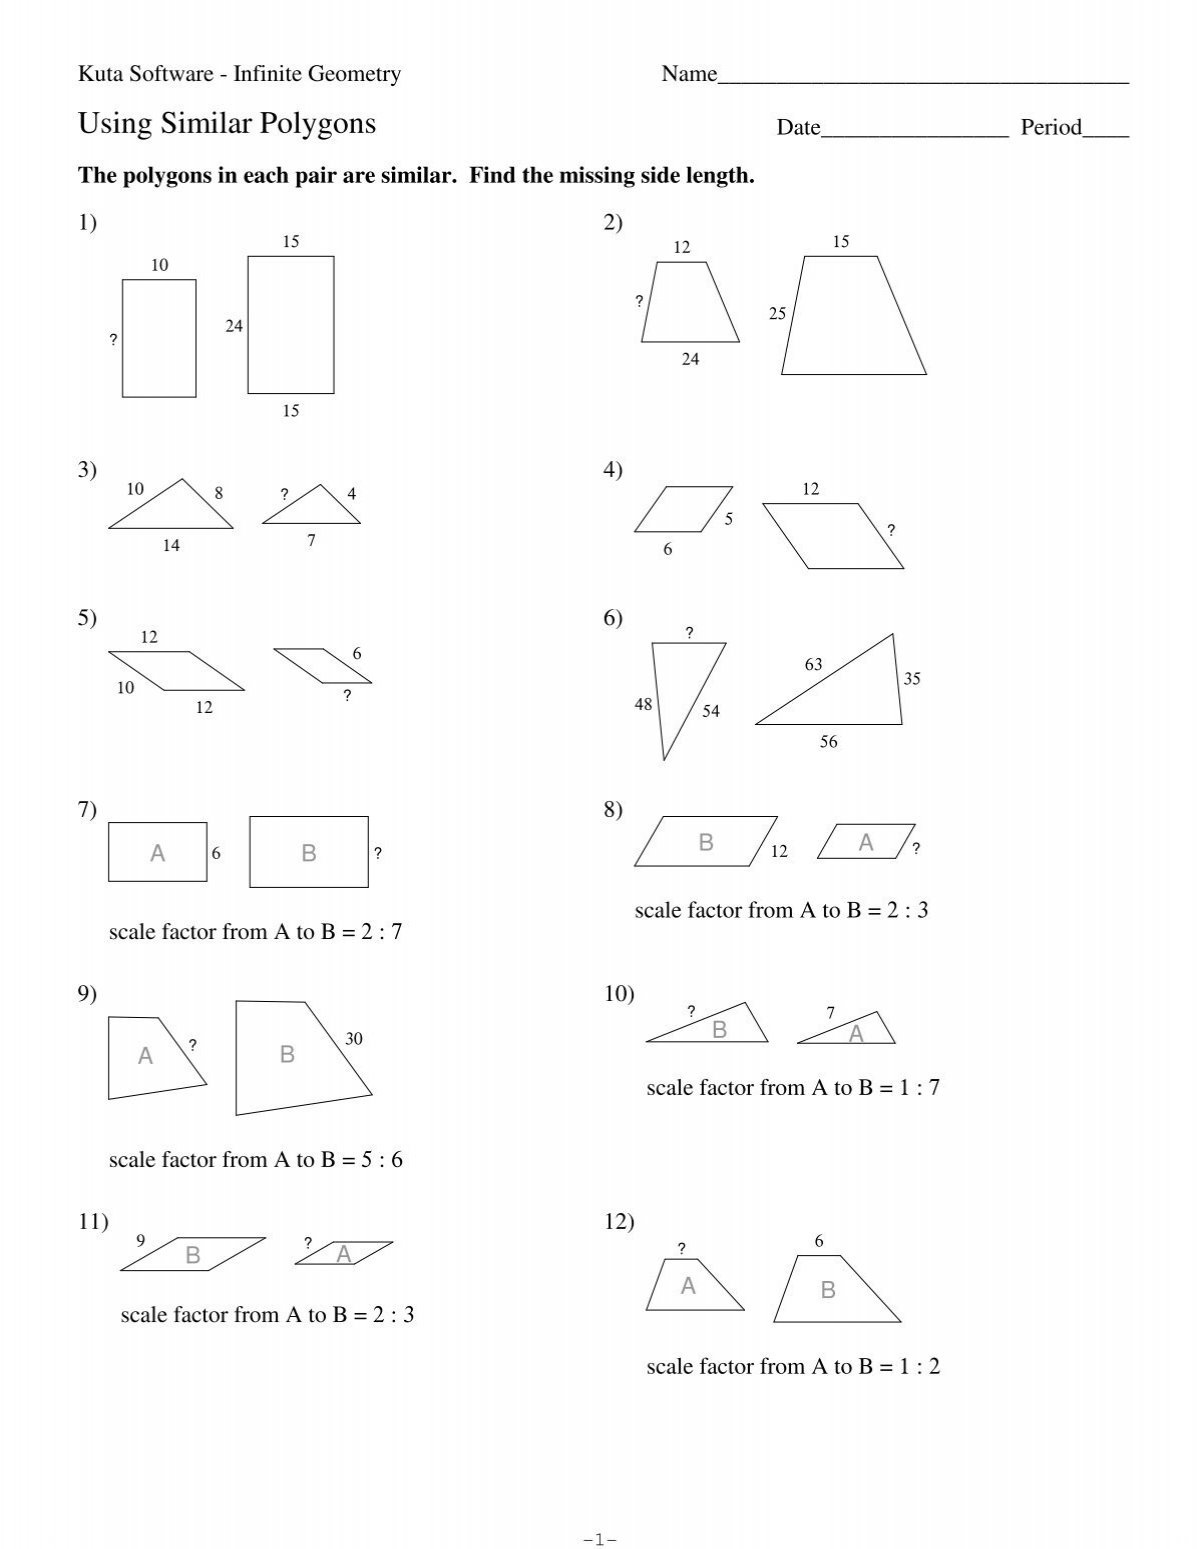 7-using-similar-polygons-kuta-software